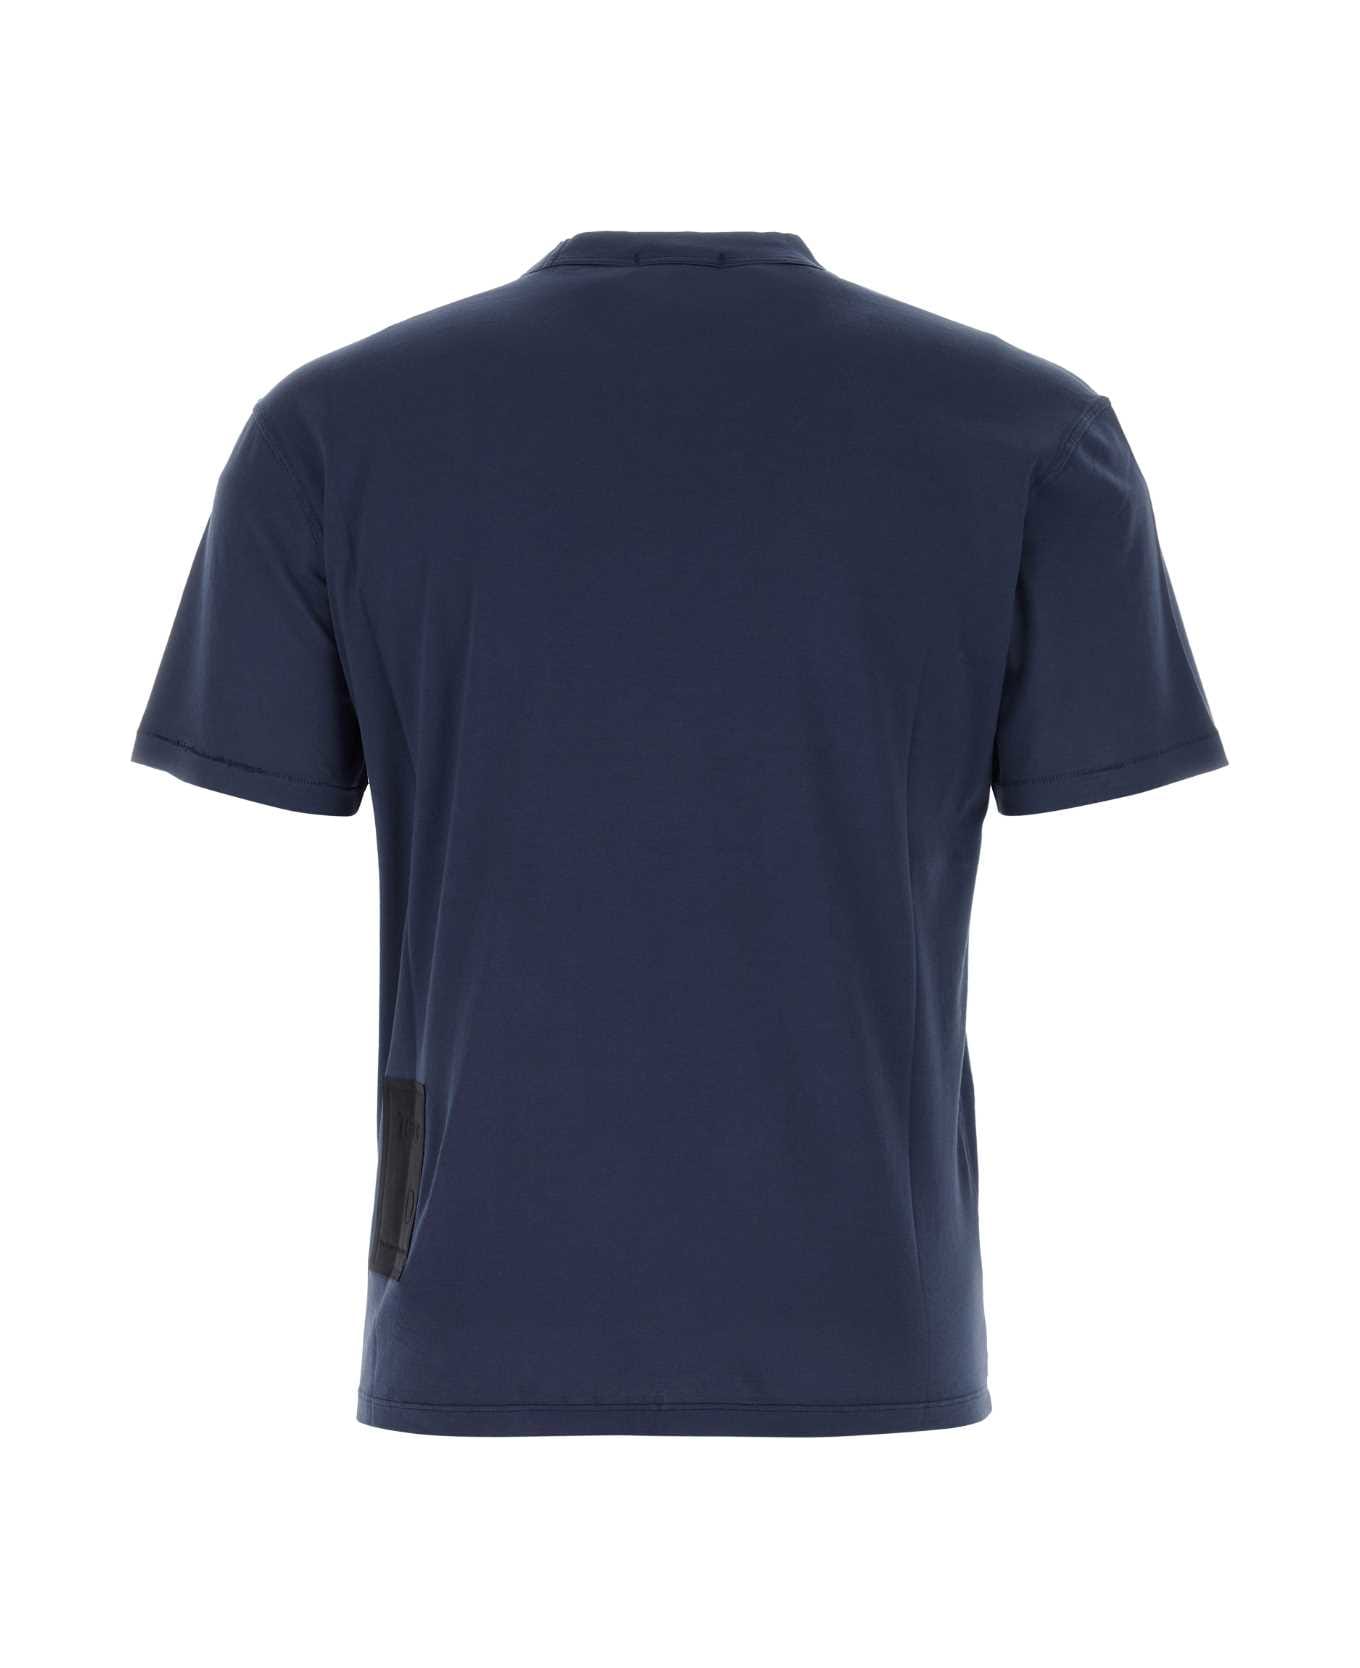 Ten C Navy Blue Cotton T-shirt - BLUNOTTE シャツ